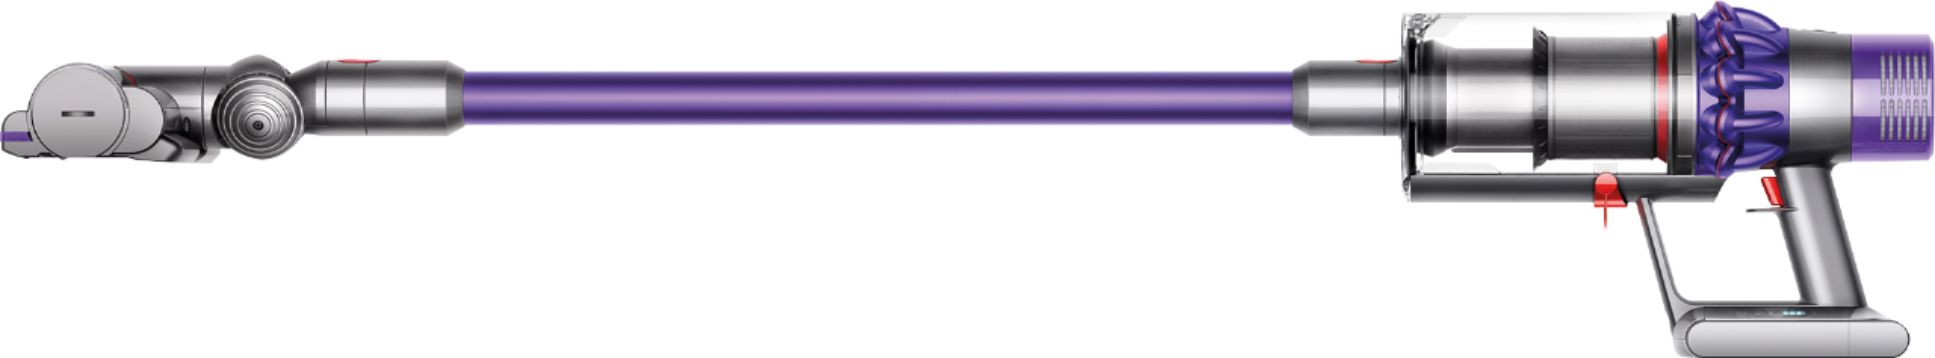 Left View: Dyson - Cyclone V10 Animal Cord-Free Stick Vacuum - Purple